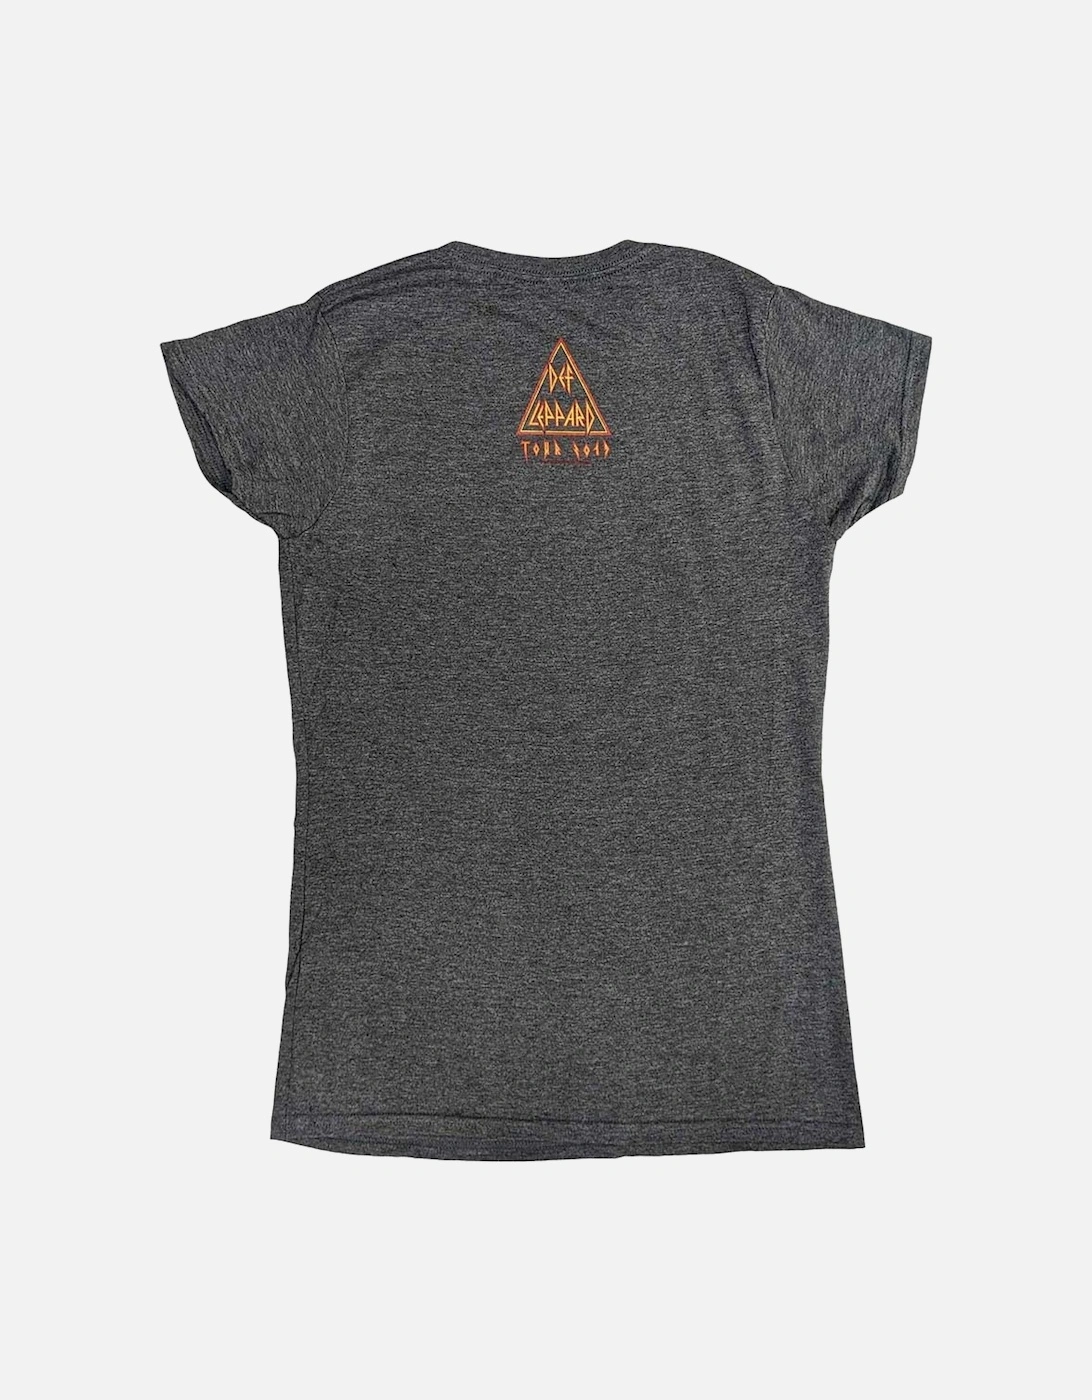 Womens/Ladies Love Bites Tour 2019 T-Shirt